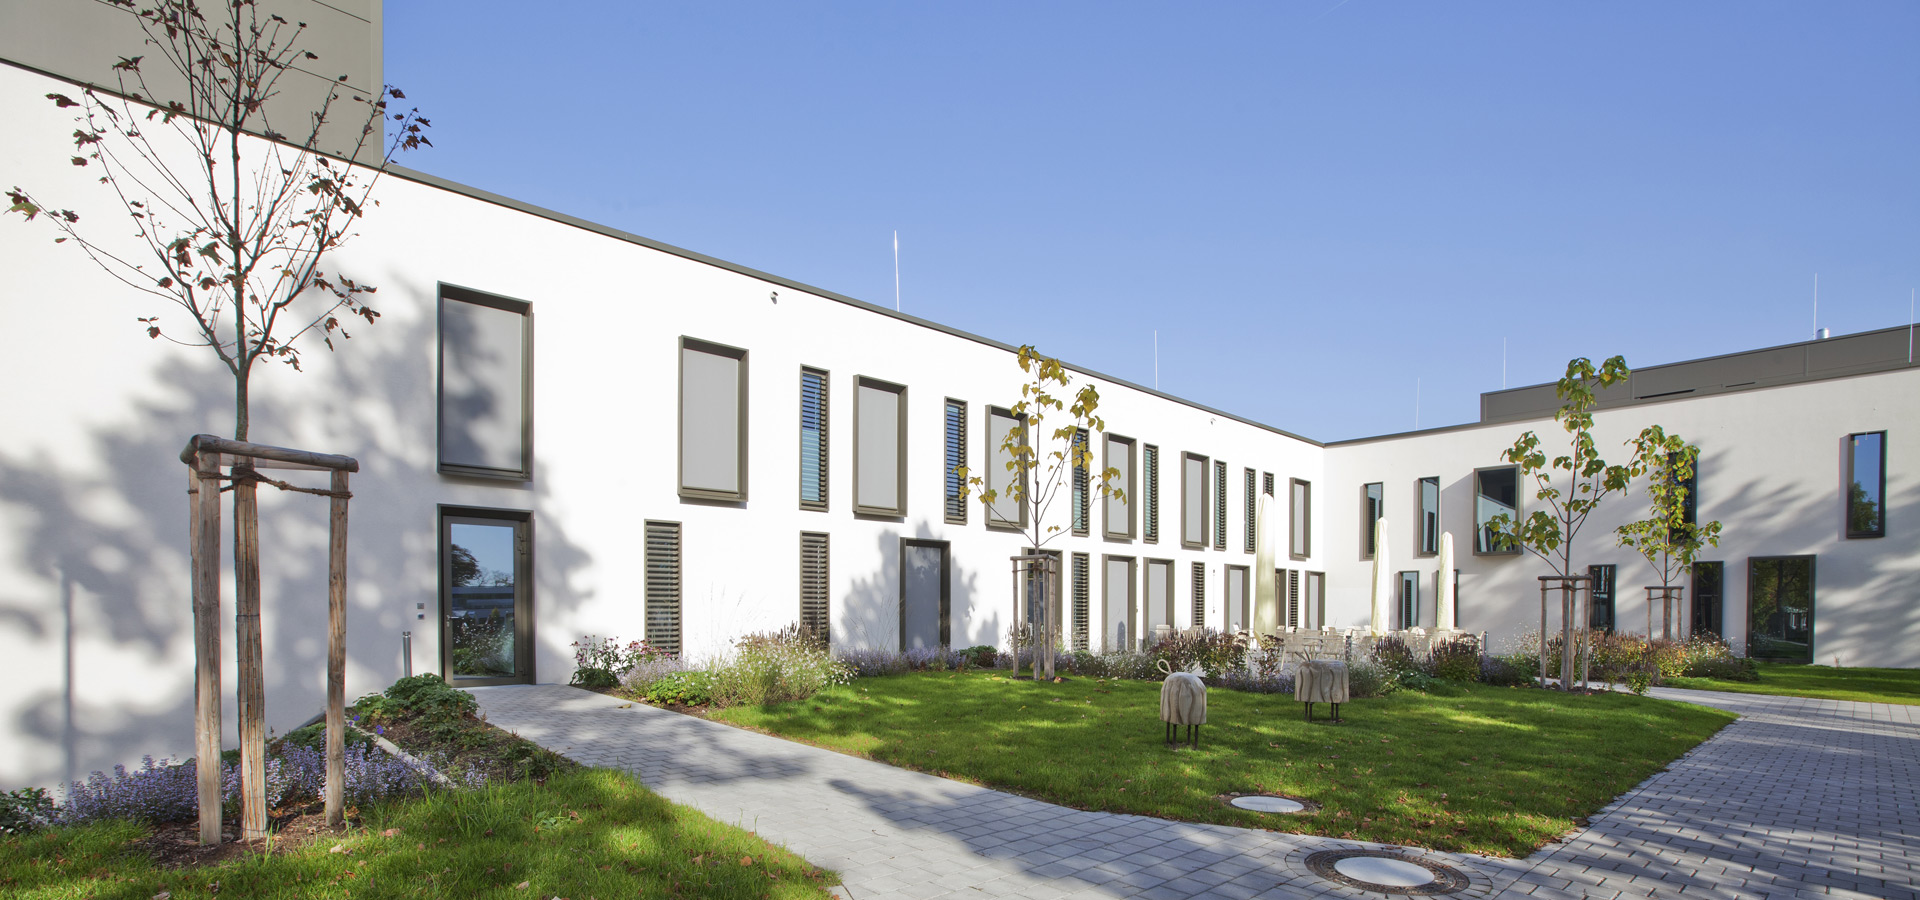 Gartenhof Küsters - St. Augustinus Klinik, Neuss